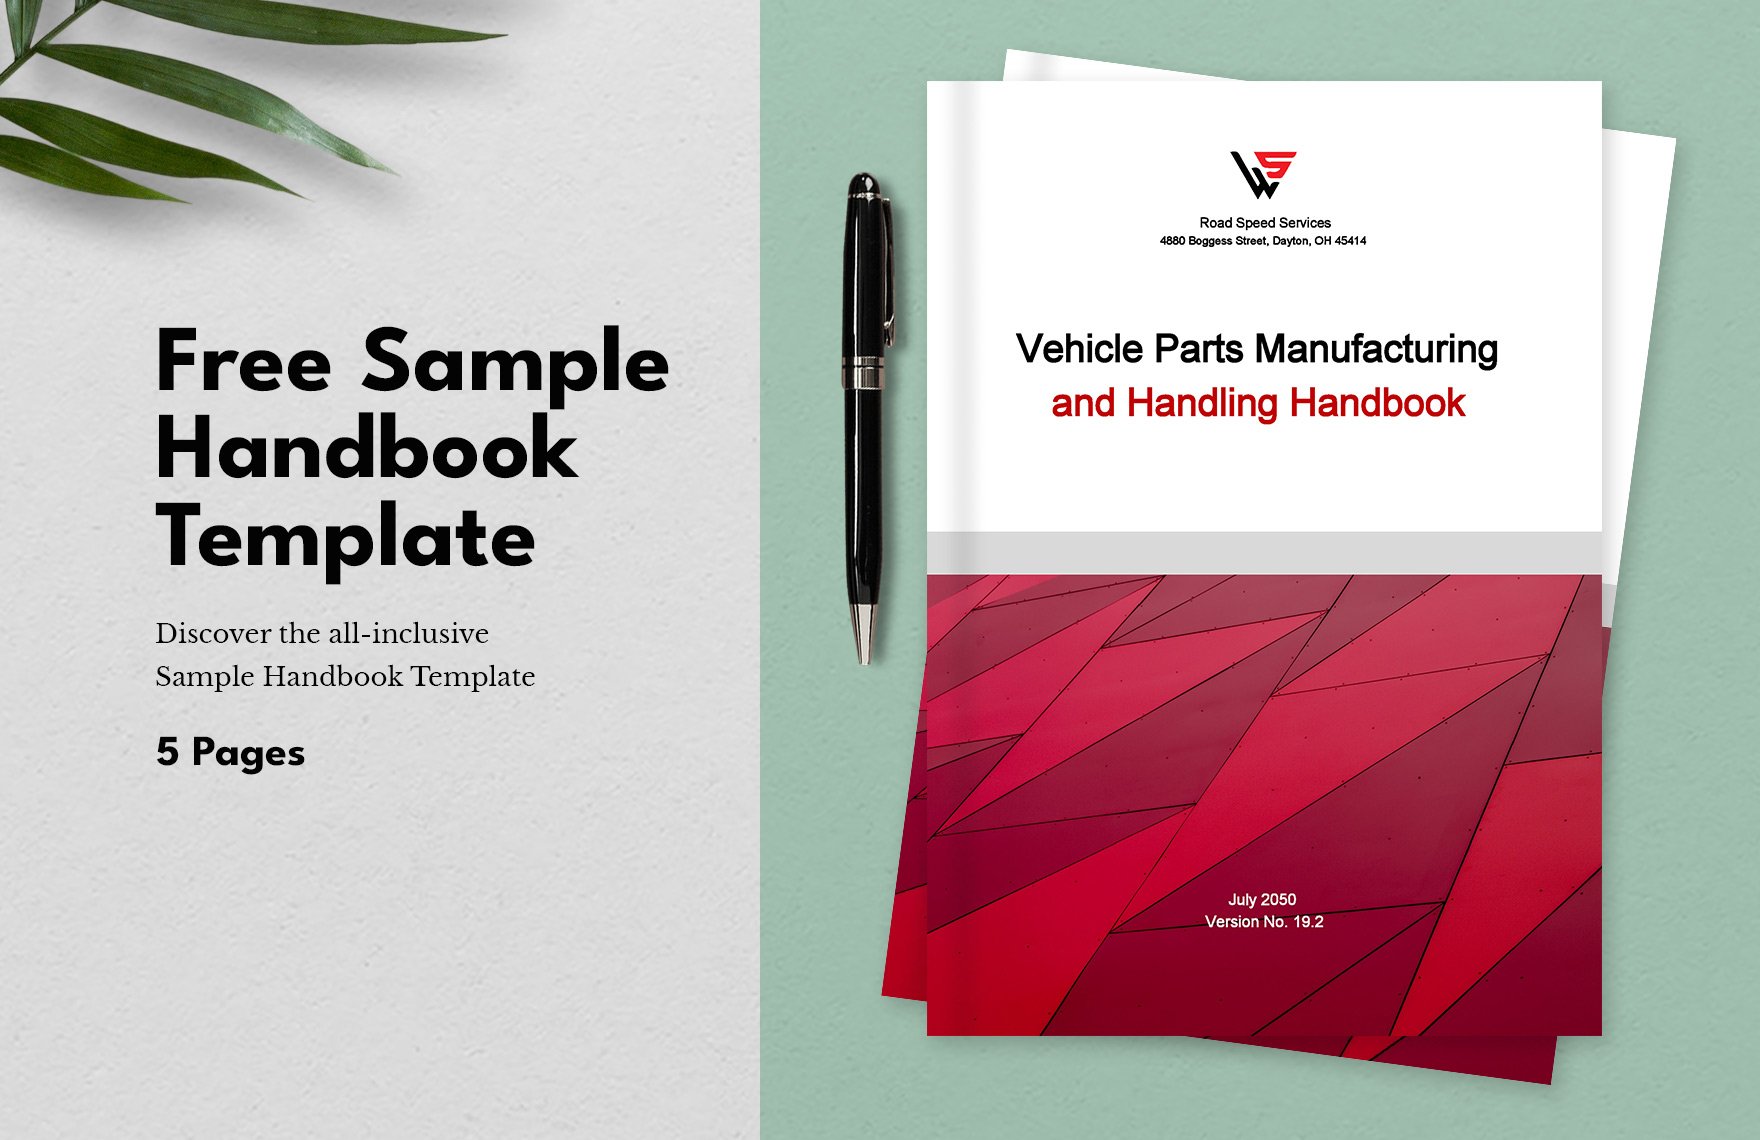 Free Sample Handbook Template